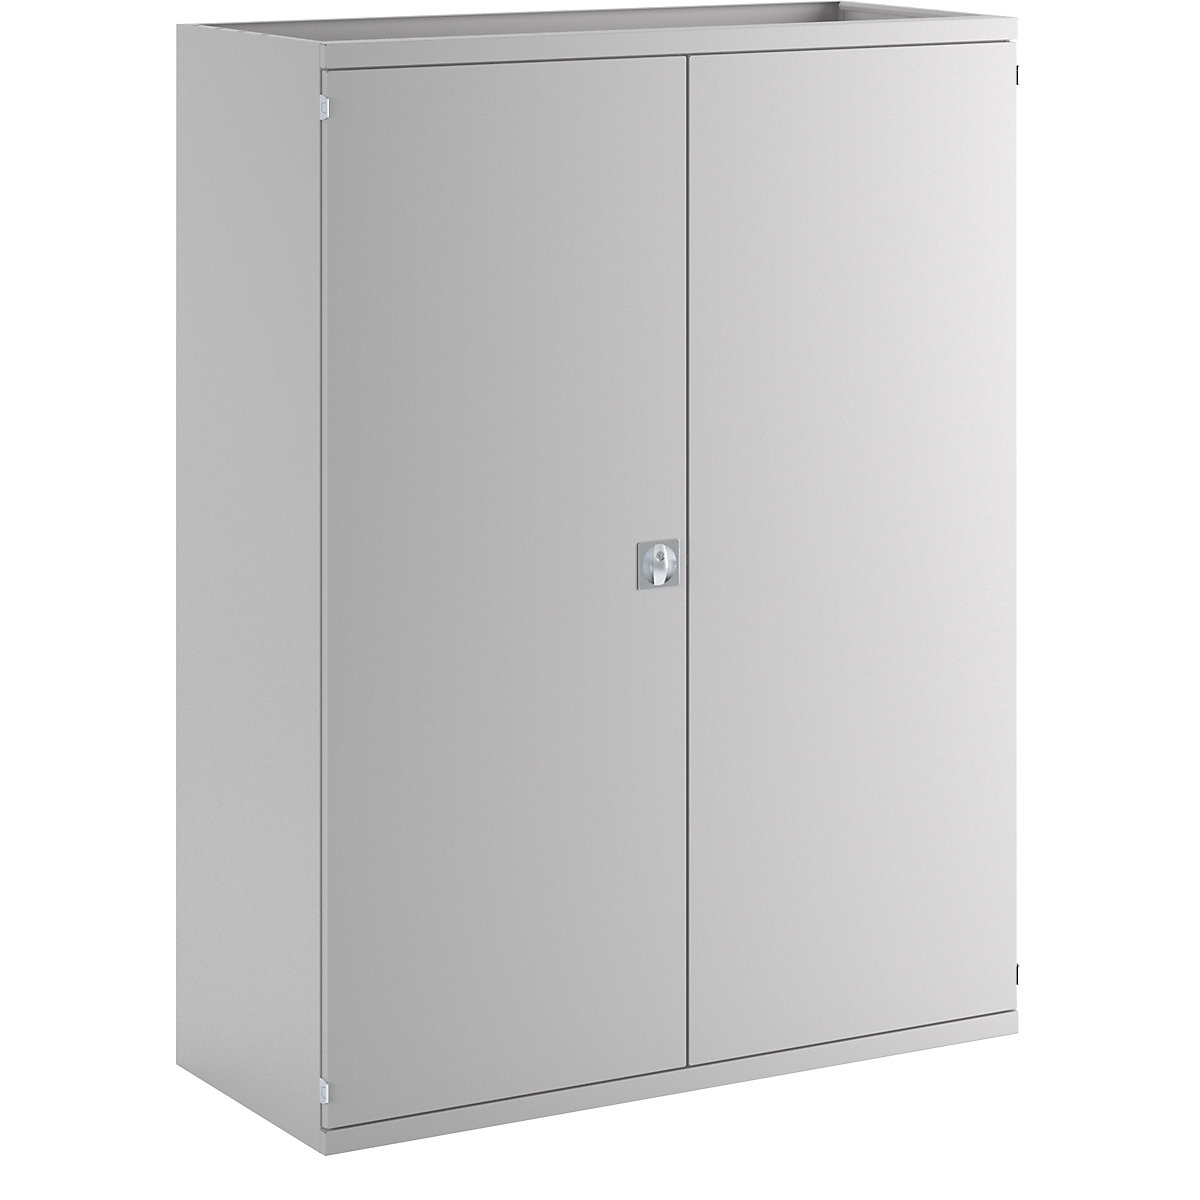 JUMBO heavy duty cupboard made of sheet steel – eurokraft pro, 6 shelves, 6 x 120 mm high drawers, light grey / light grey-2